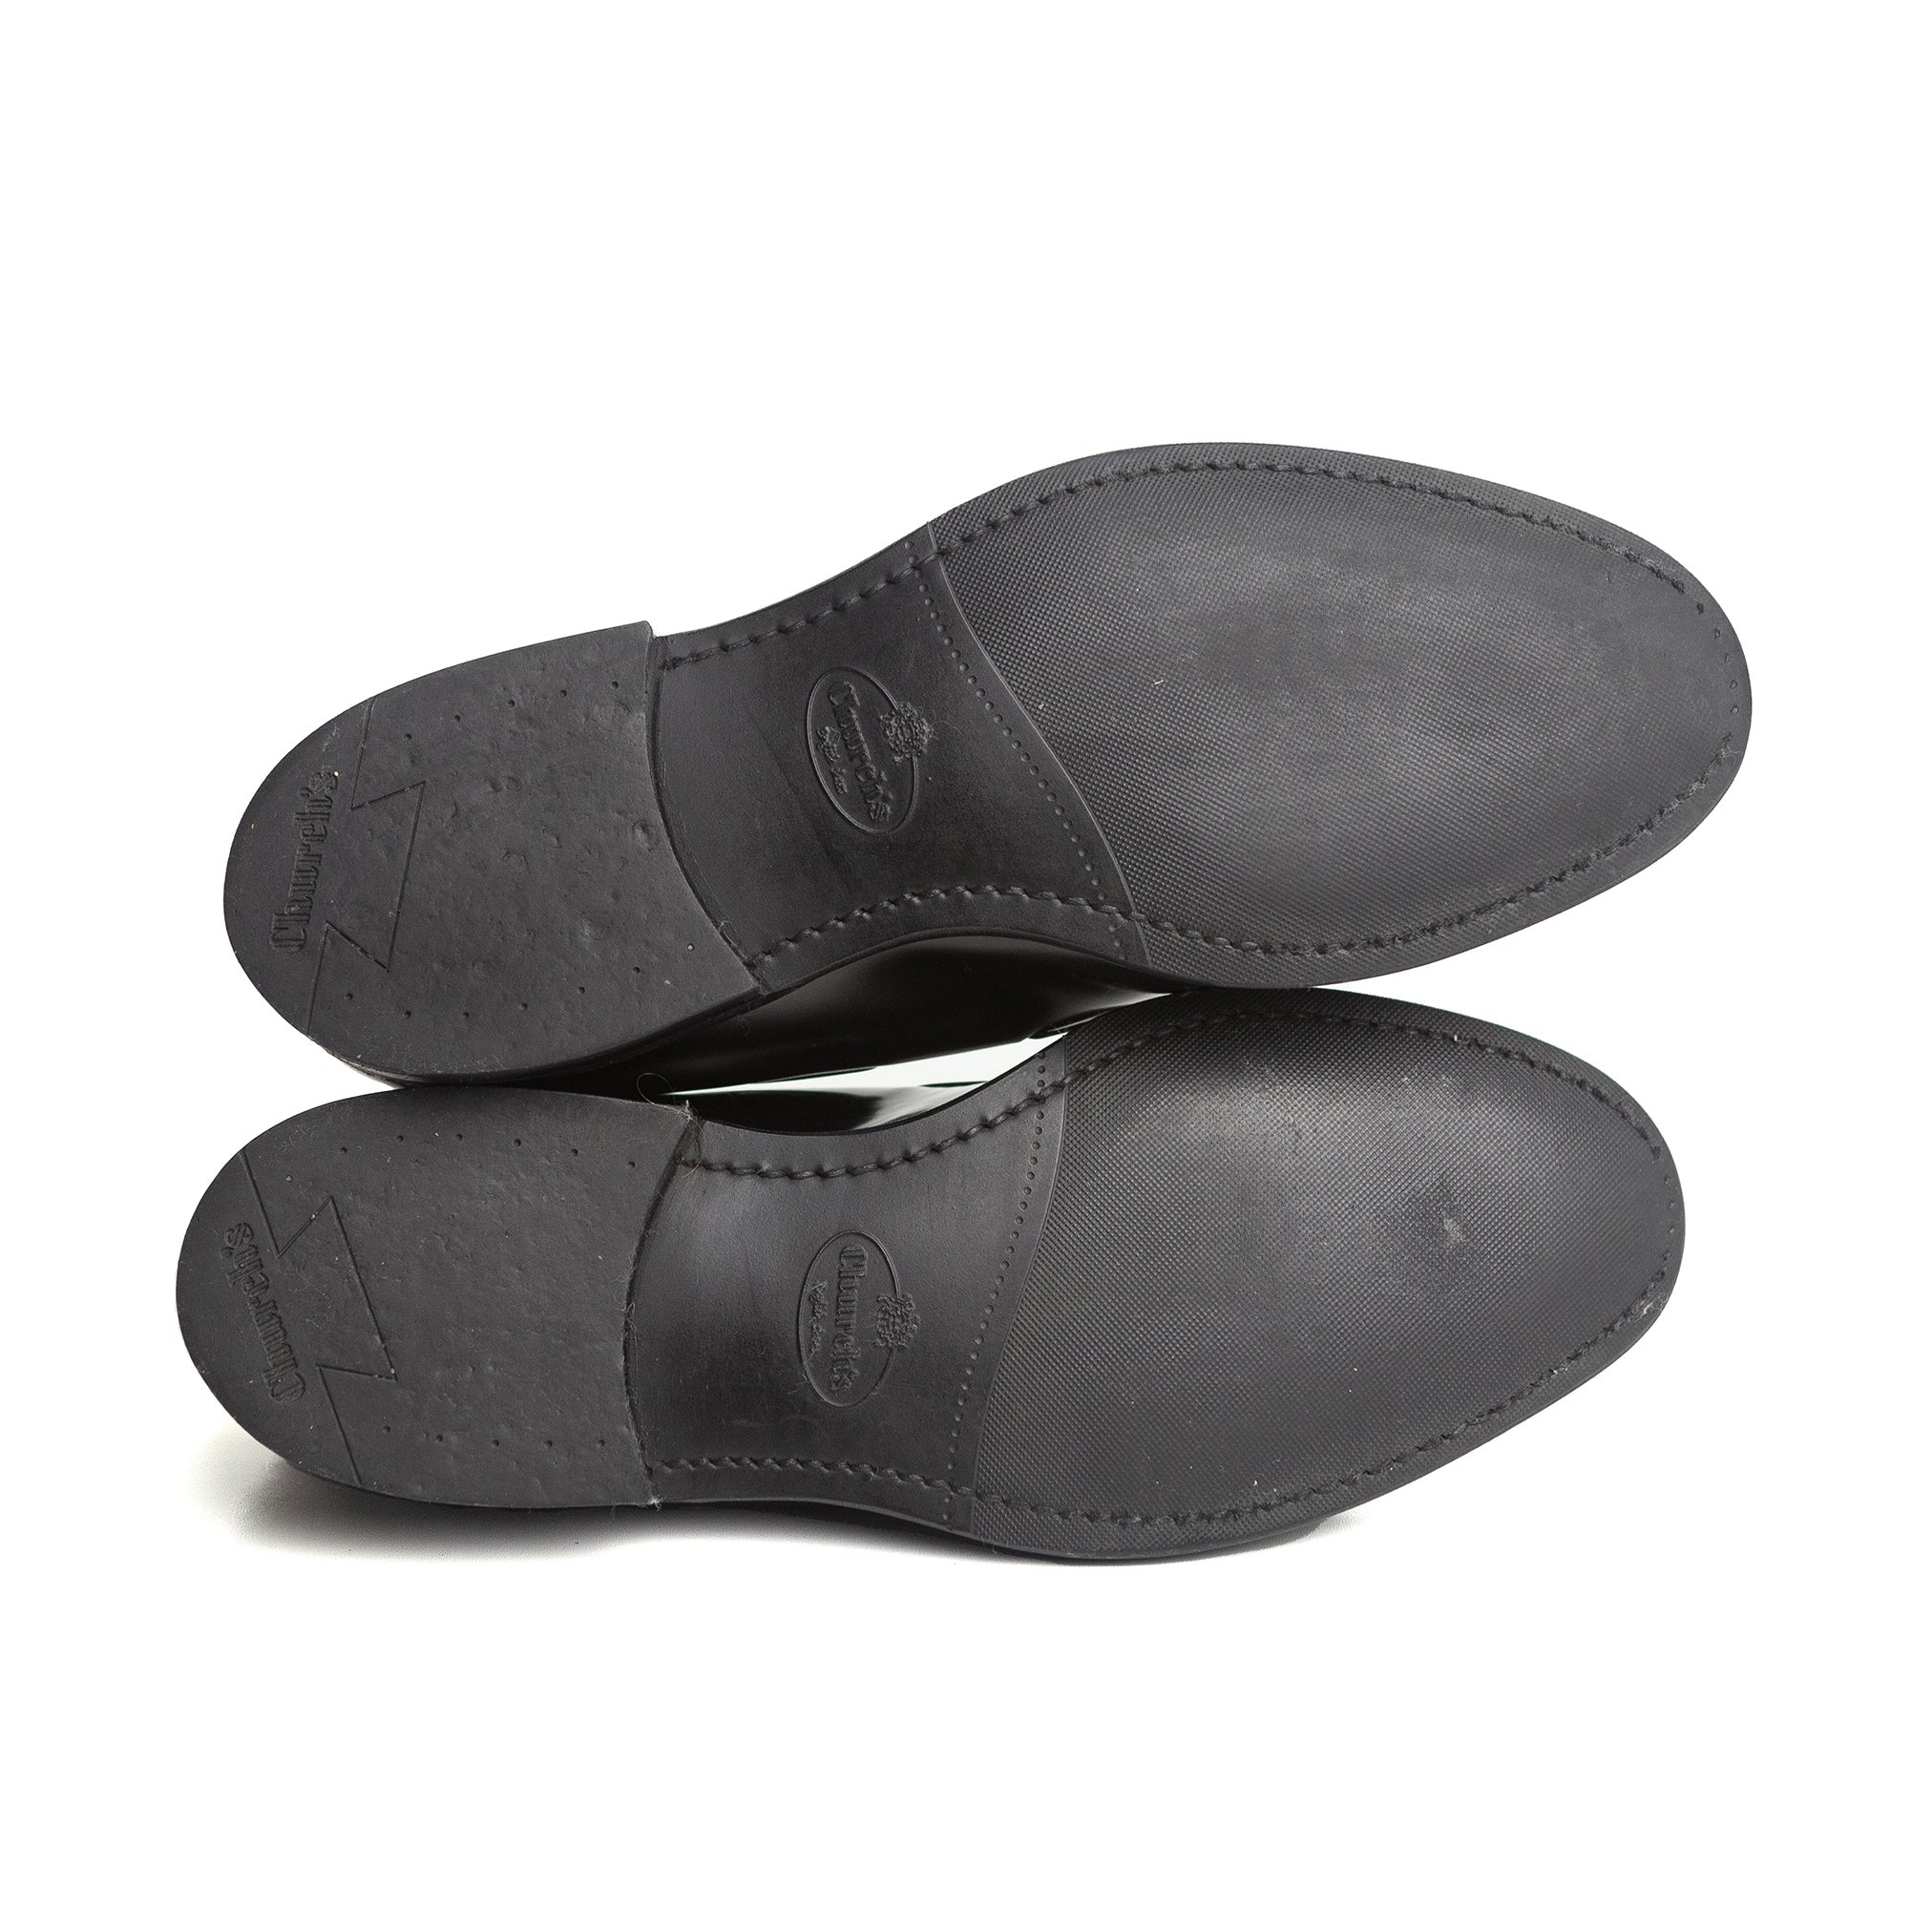 Chicane Black Leather Shoes 8 UK